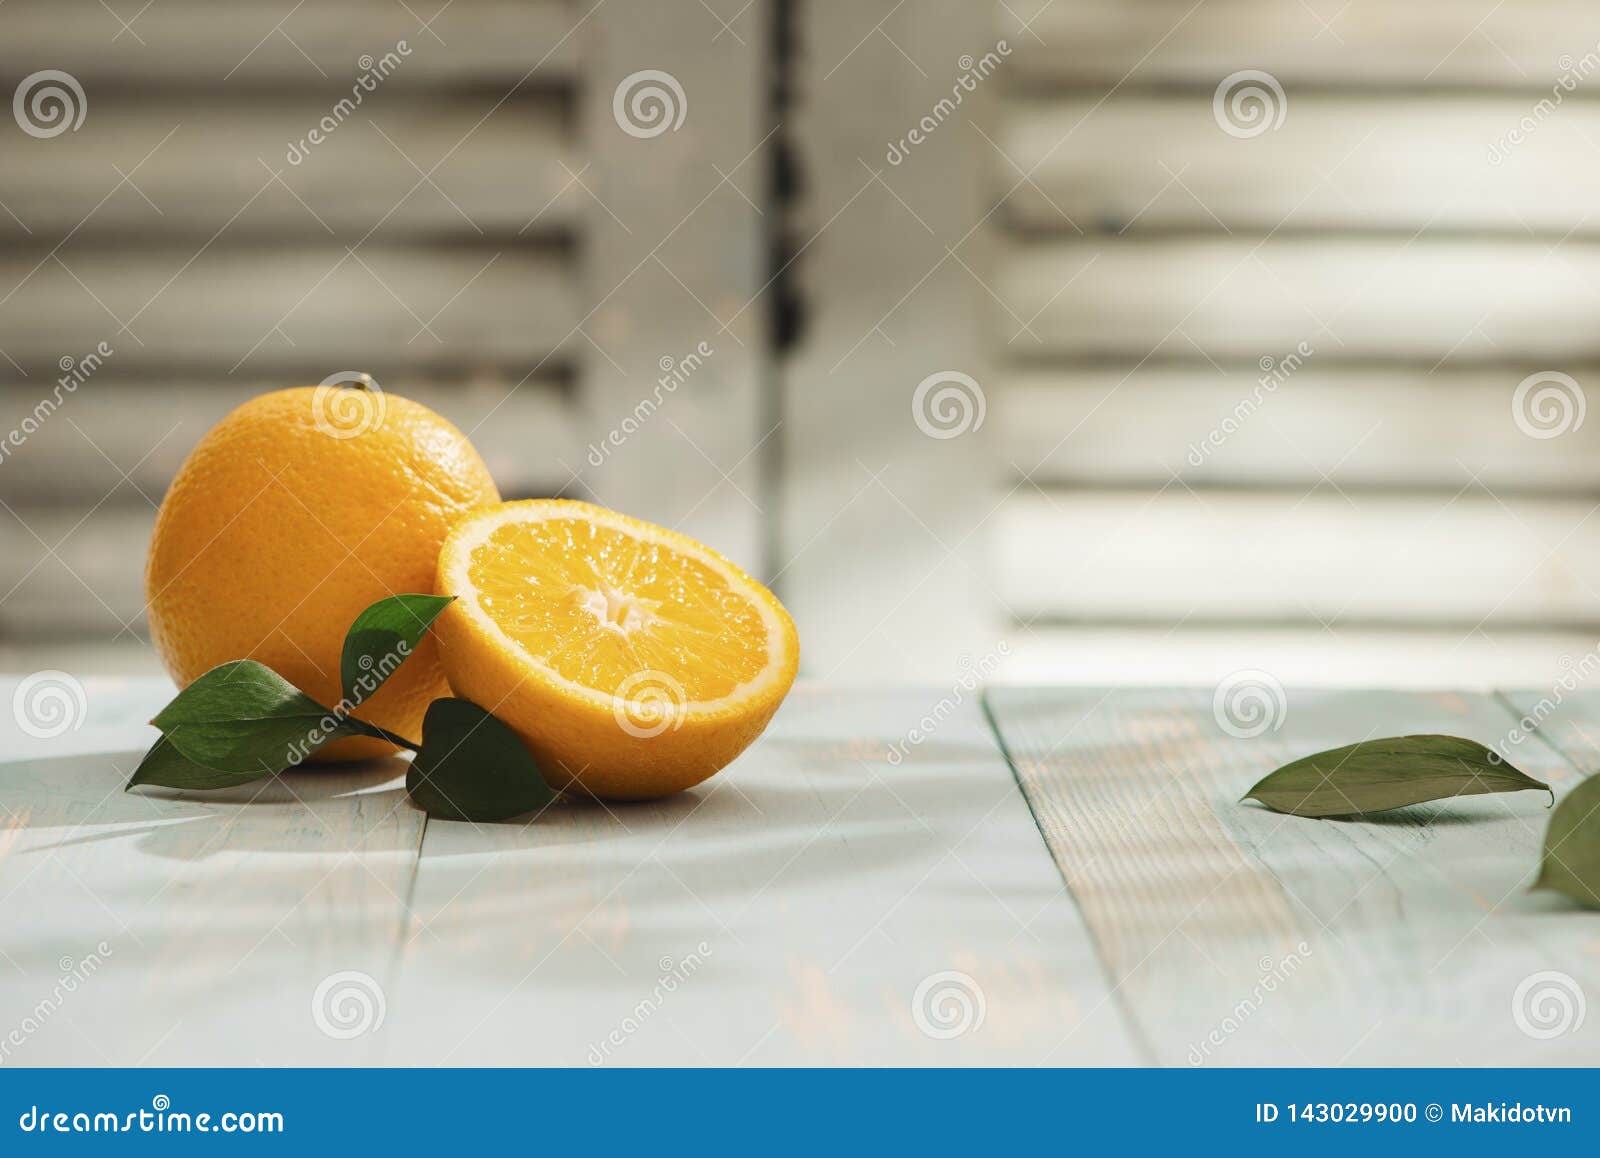 https://thumbs.dreamstime.com/z/still-life-glass-fresh-orange-juice-vintage-wood-table-copy-space-background-143029900.jpg